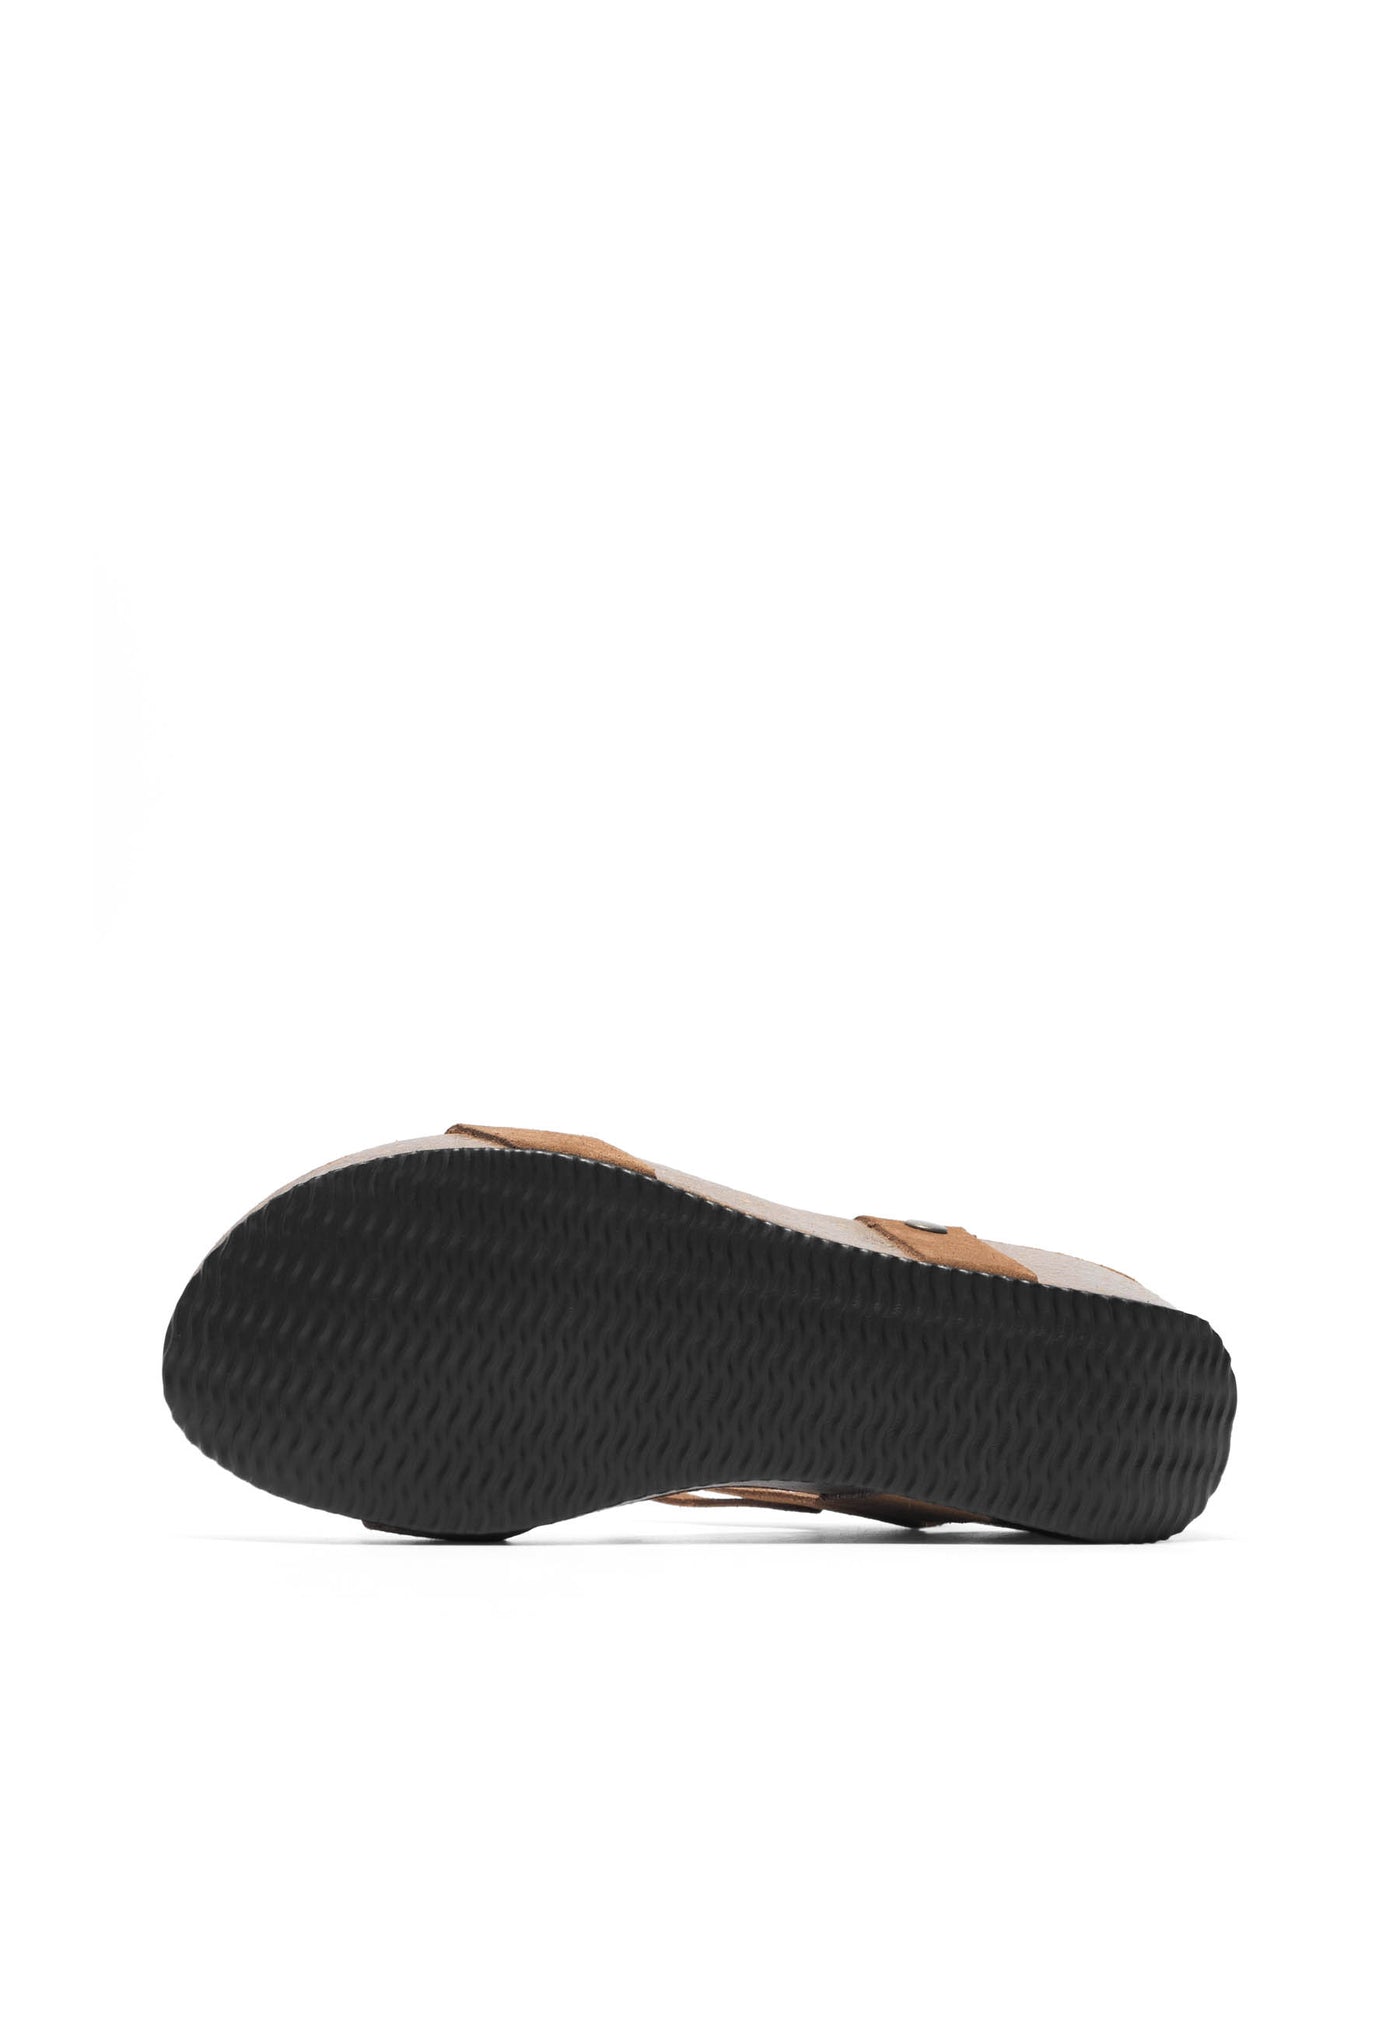 CASHOTT CASANNI Velcro Sandal Suede Velcro Toffee